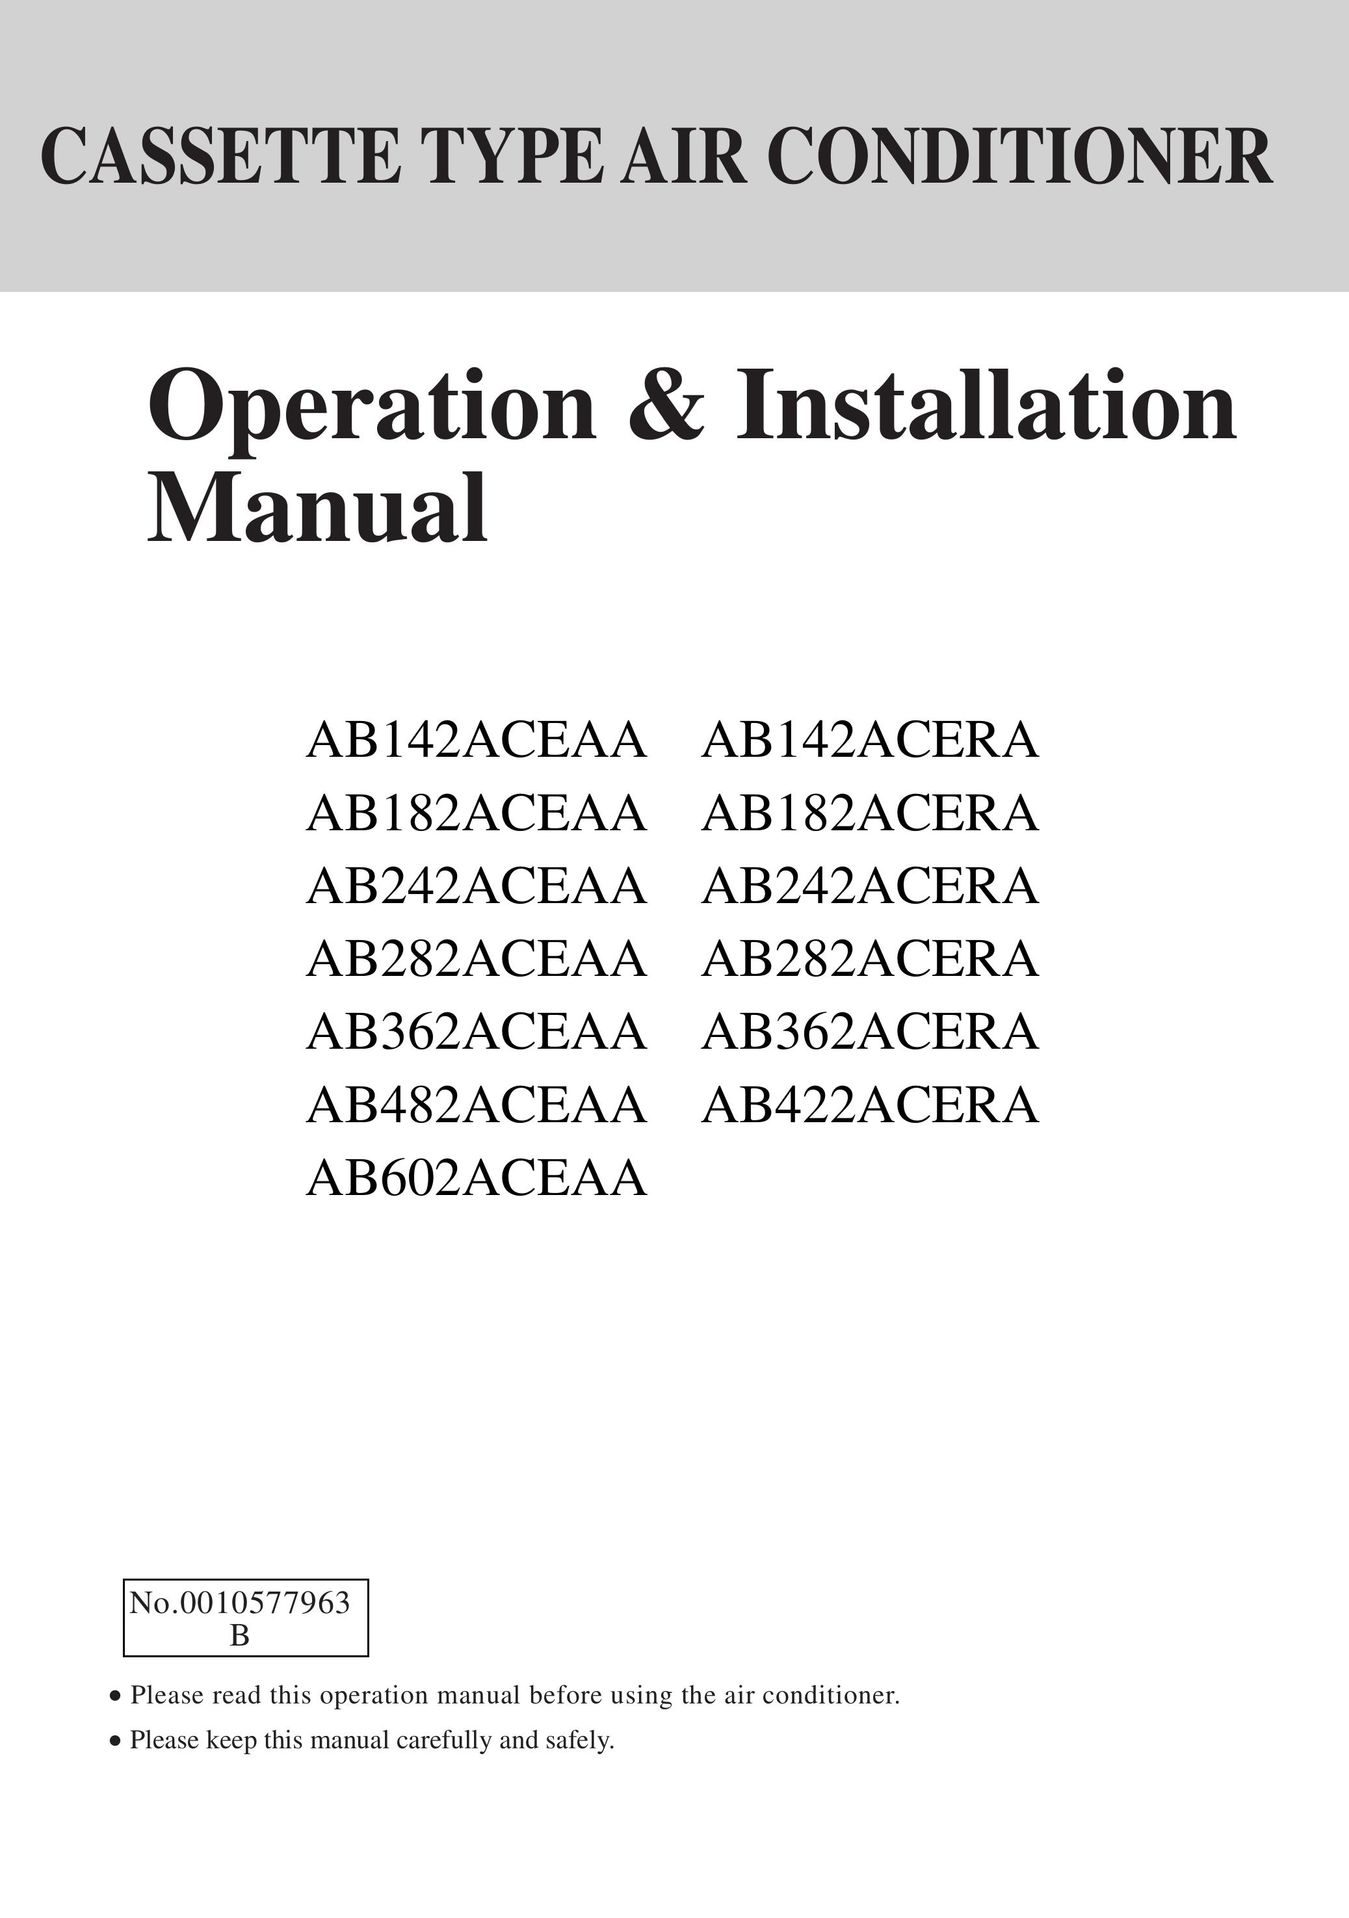 Haier AB422ACERA Air Conditioner User Manual